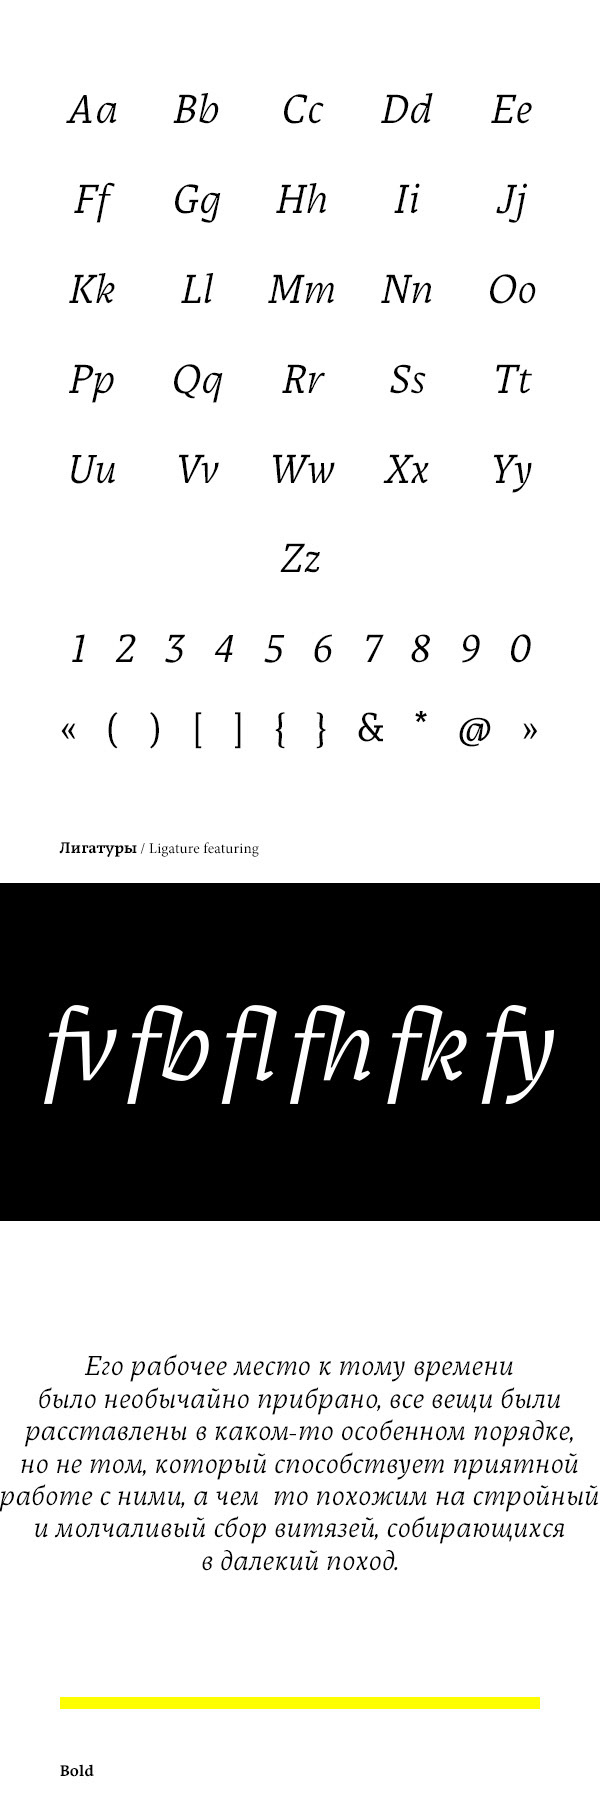 Pulitzer font type Typeface BHSAD БВШД new quick bright live шрифт Пулитцер Cyrillic